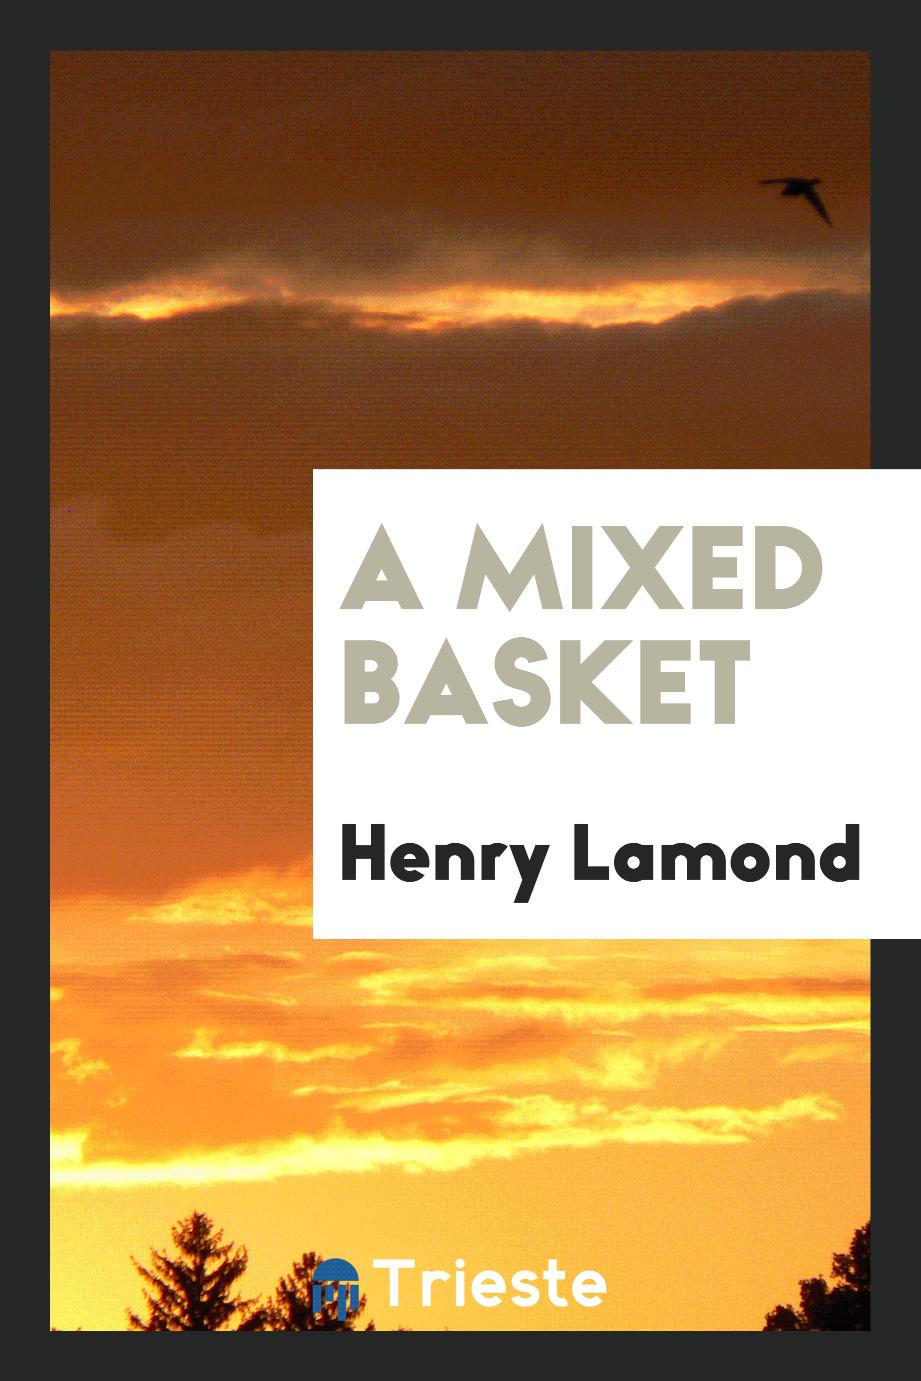 A mixed basket